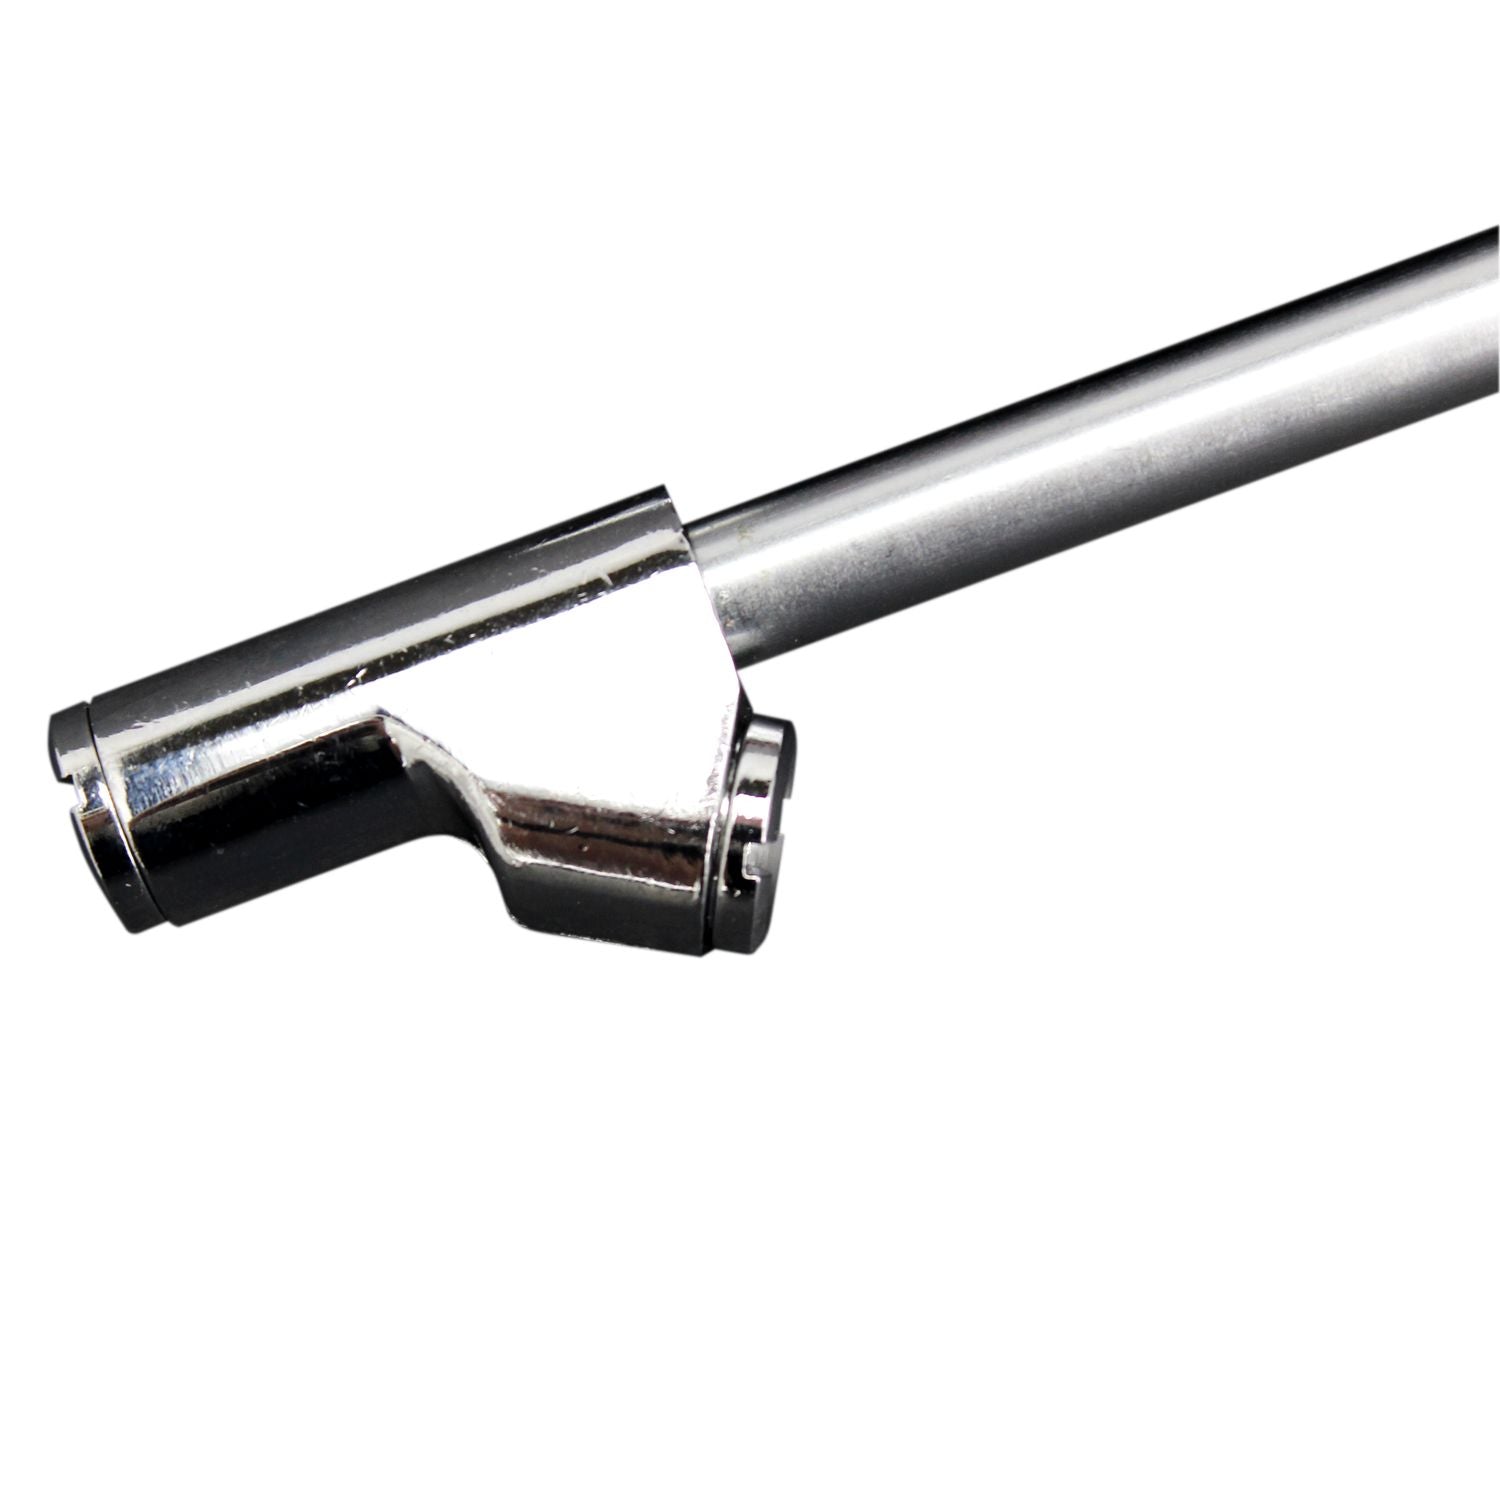 Milton® EXELAIR® 3-in-1 Pro Analog Pistol Grip Tire Inflator